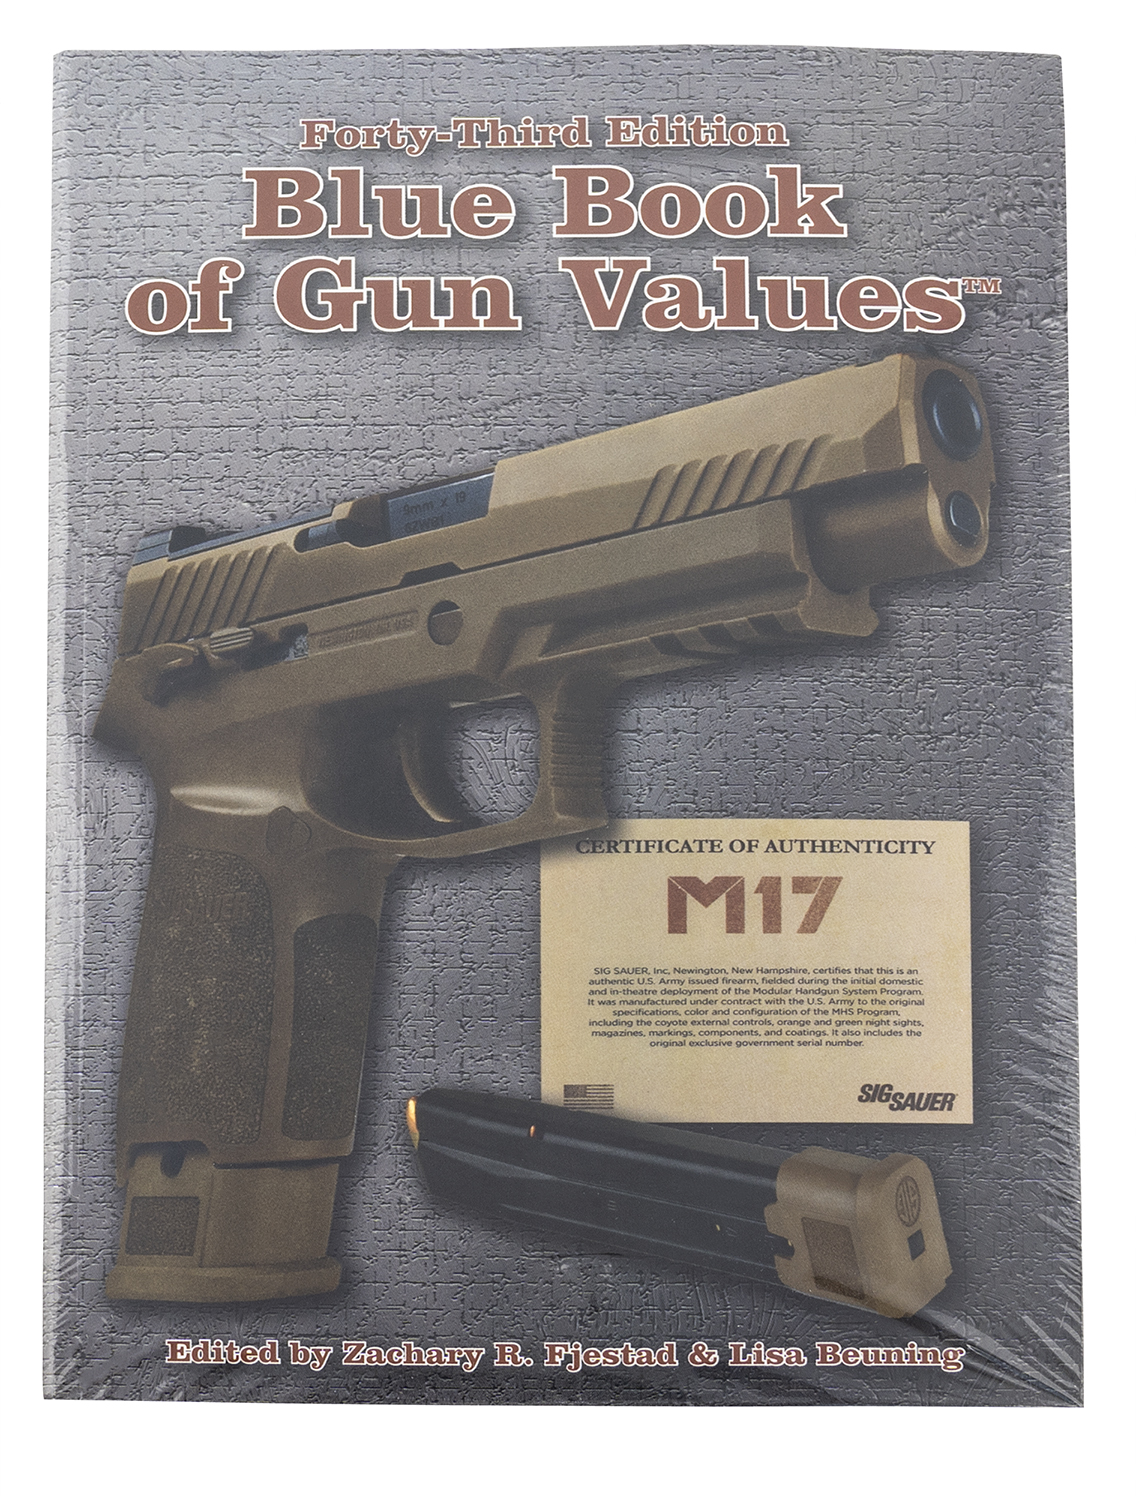 Blue Book 00043 Blue Book of Gun Values  43rd Edition